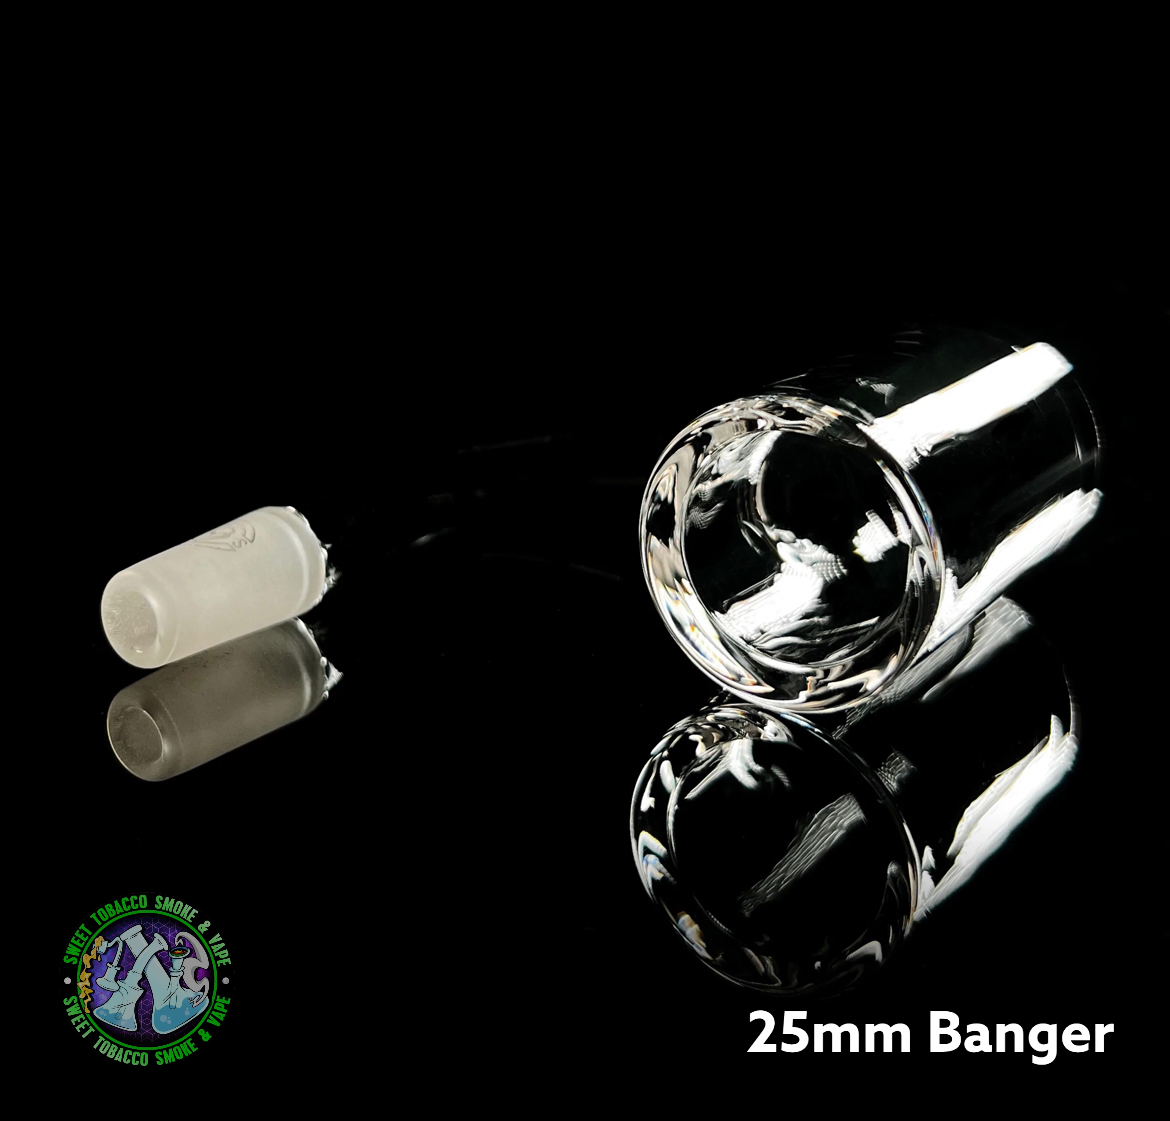 Banger Supply - Banger (25mm)